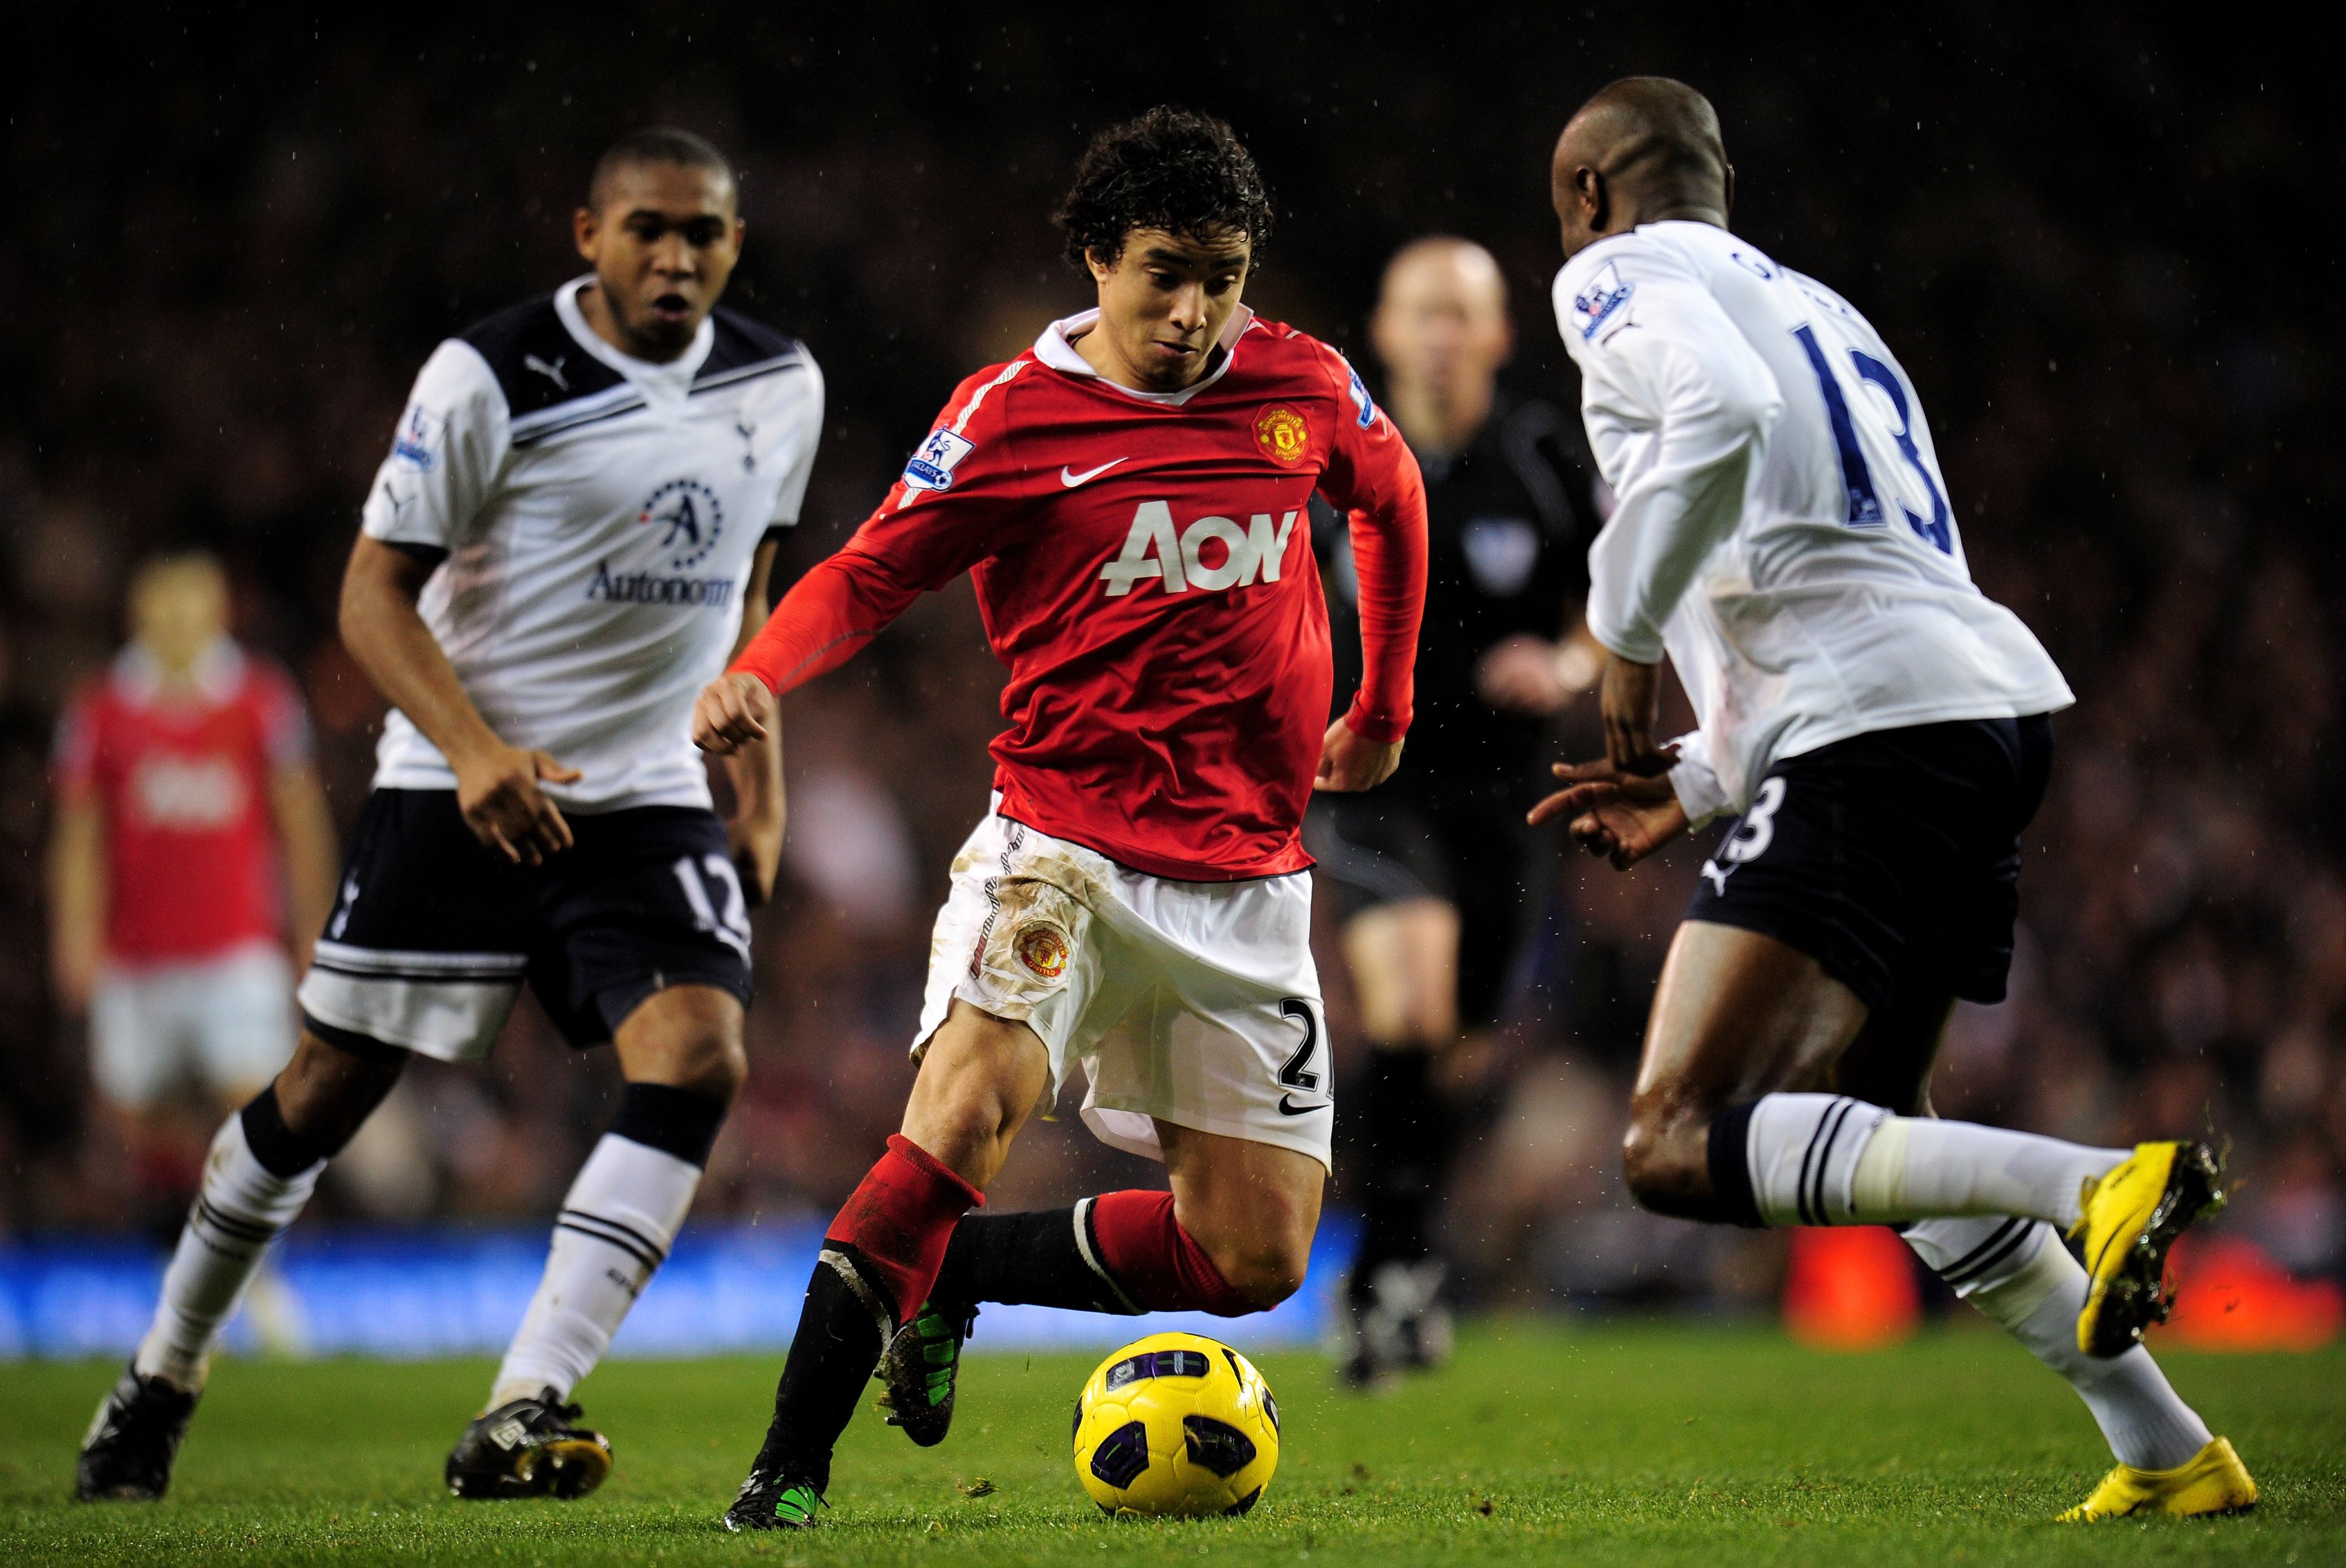 Fabio Da Silva - UEFA Champions League 2010/11 - Manchester United FC